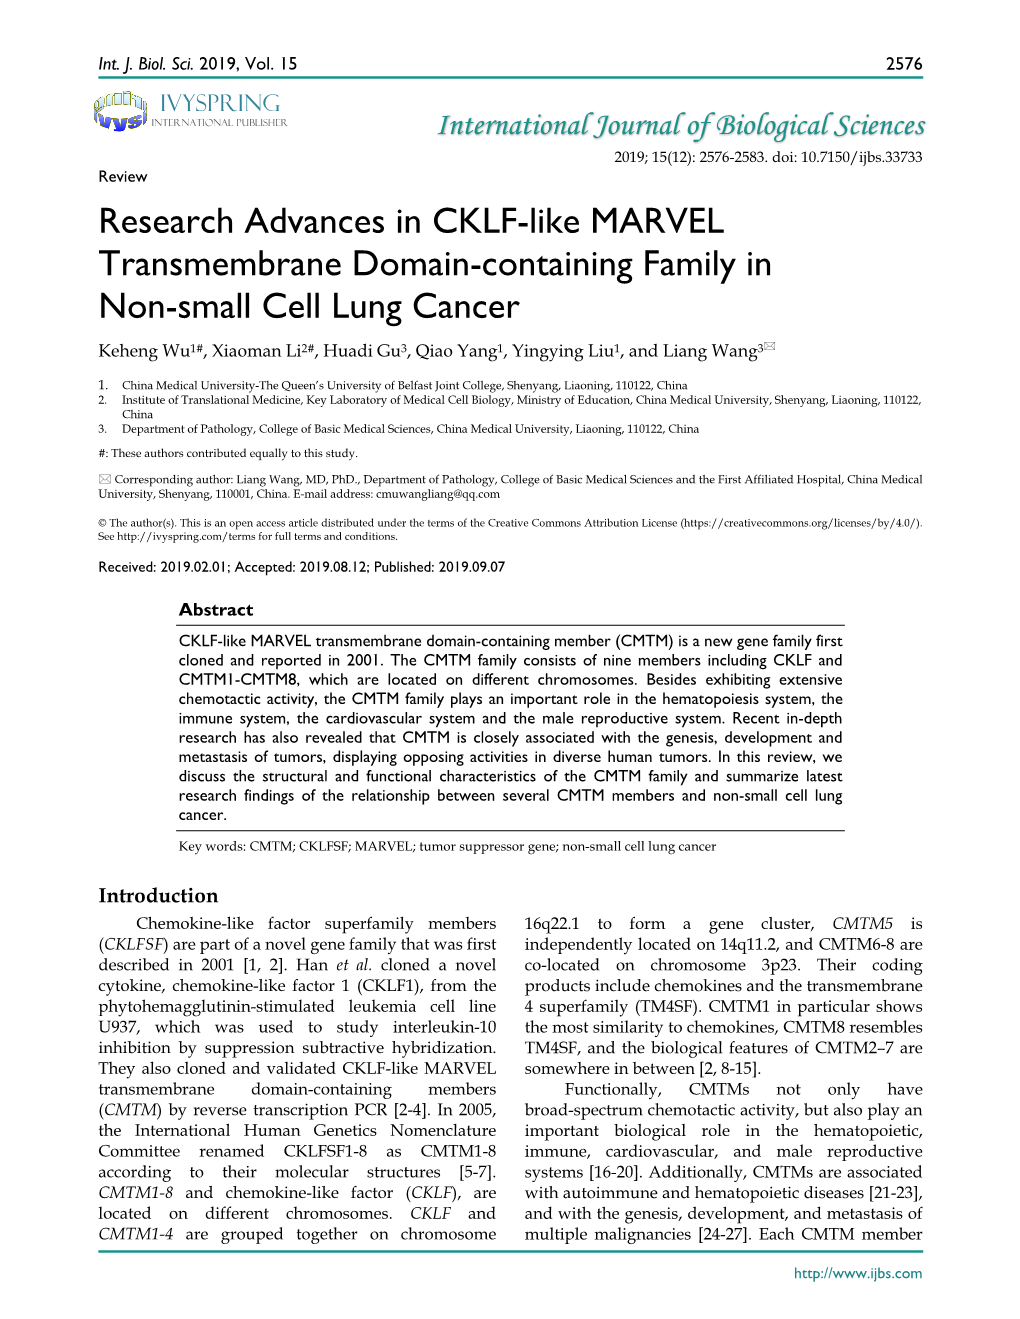 Research Advances in CKLF-Like MARVEL Transmembrane Domain